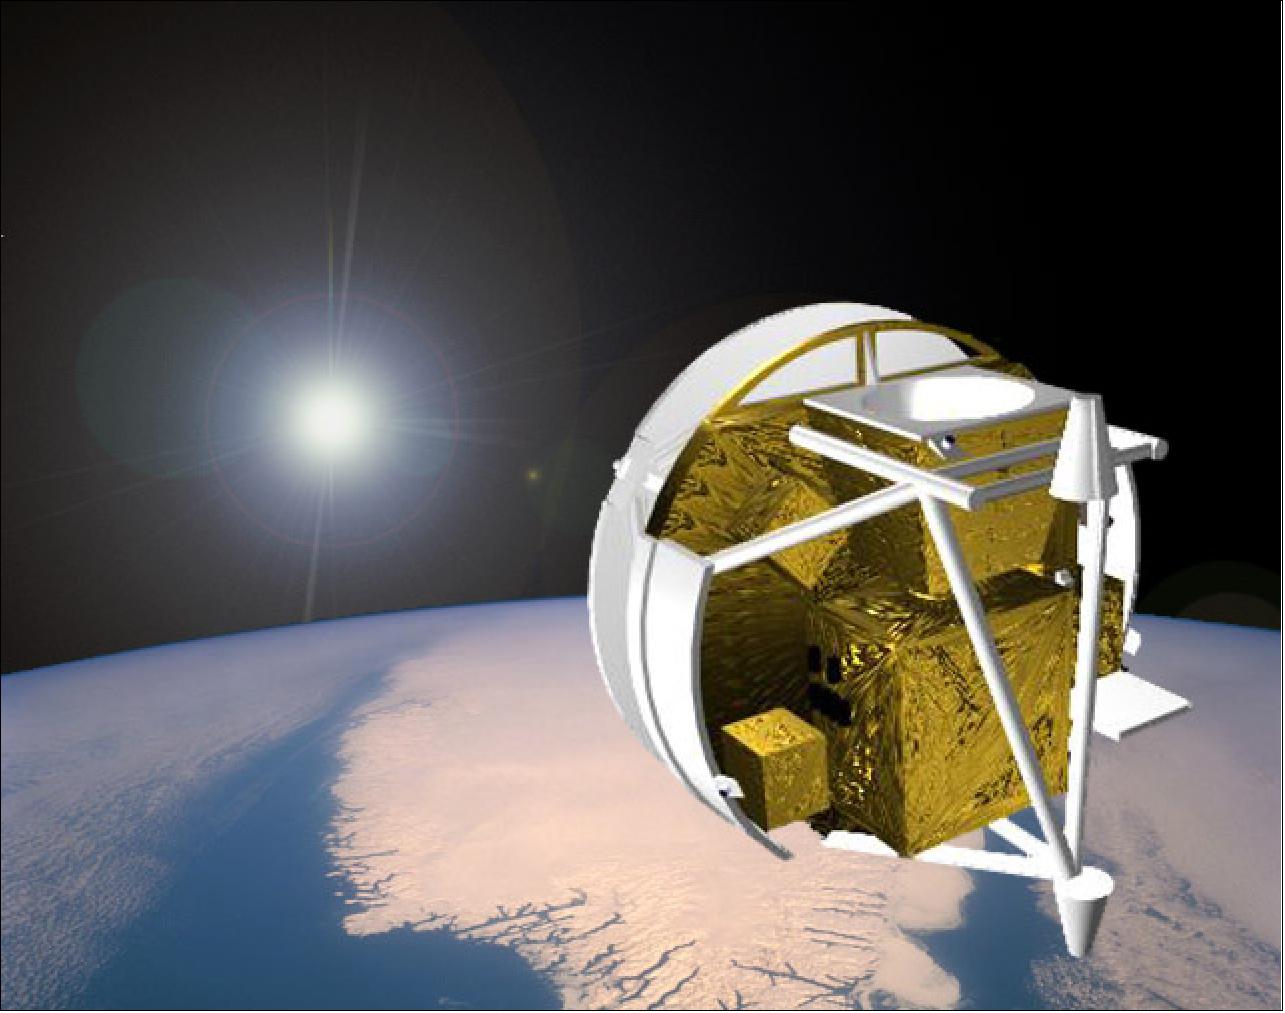 Figure 1: Artist's view of the SciSat spacecraft (image credit: Bristol Aerospace)